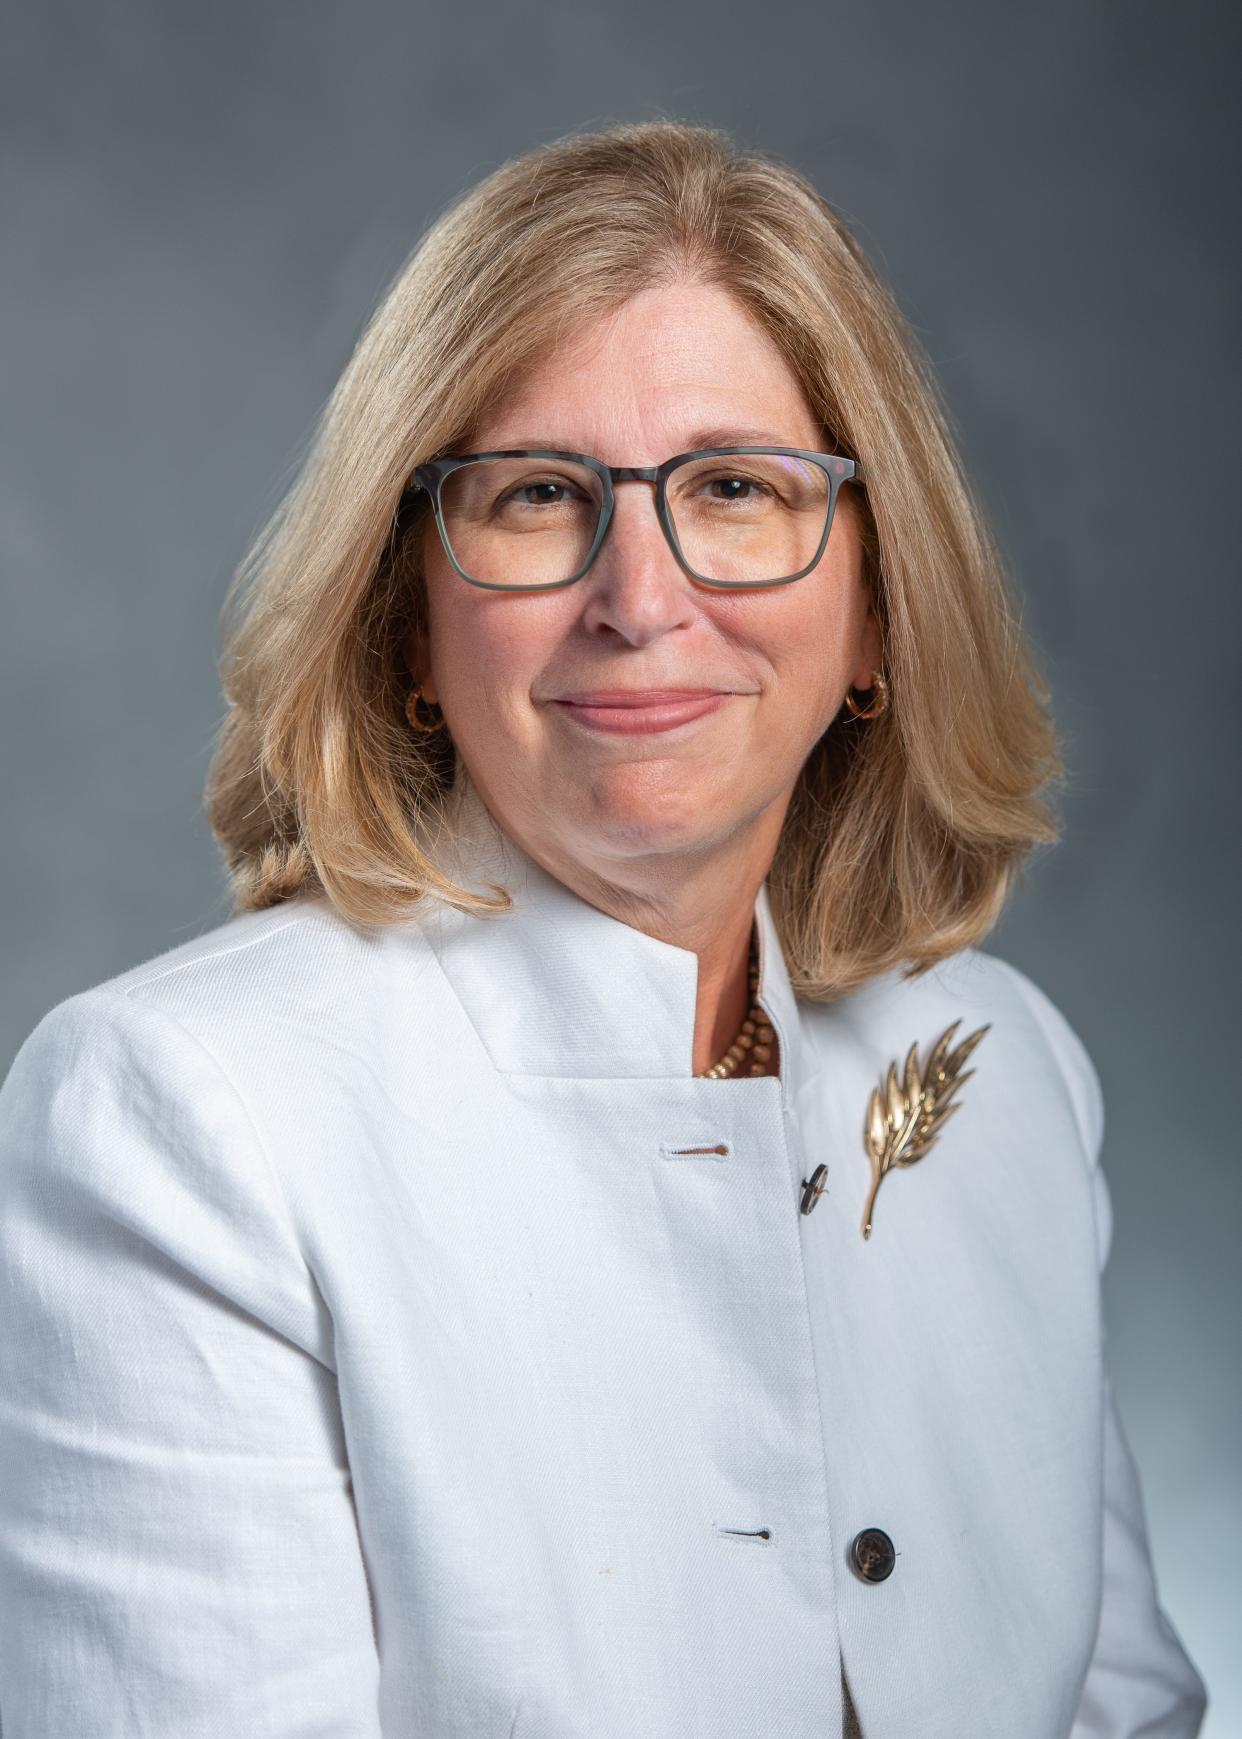 Teresa Woodruff, interim president